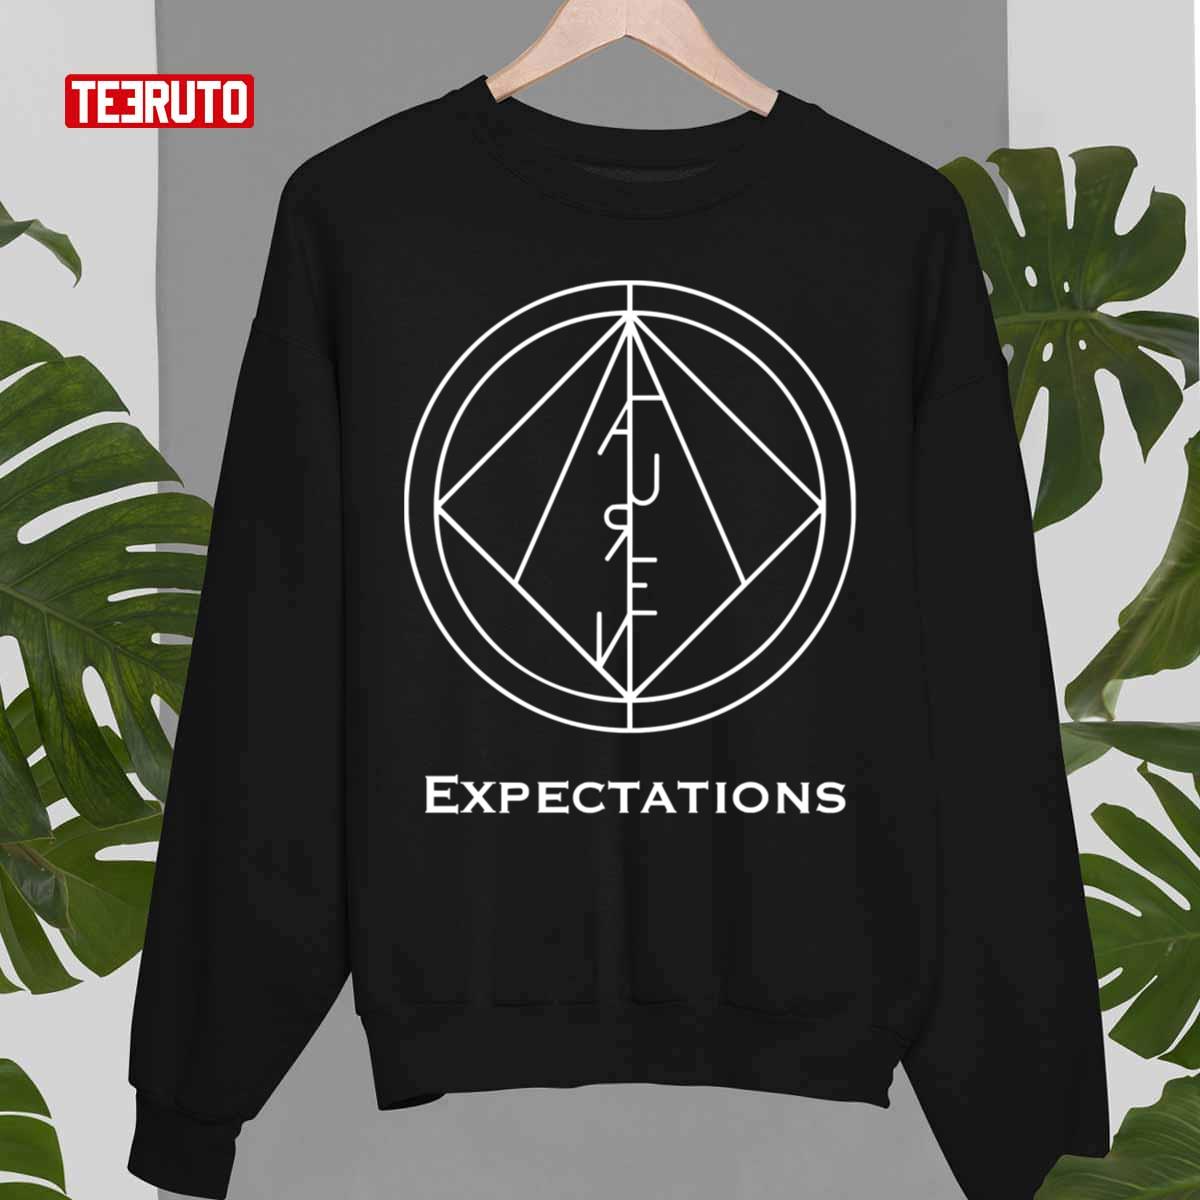 Expectations Lauren Jauregui Unisex T-Shirt